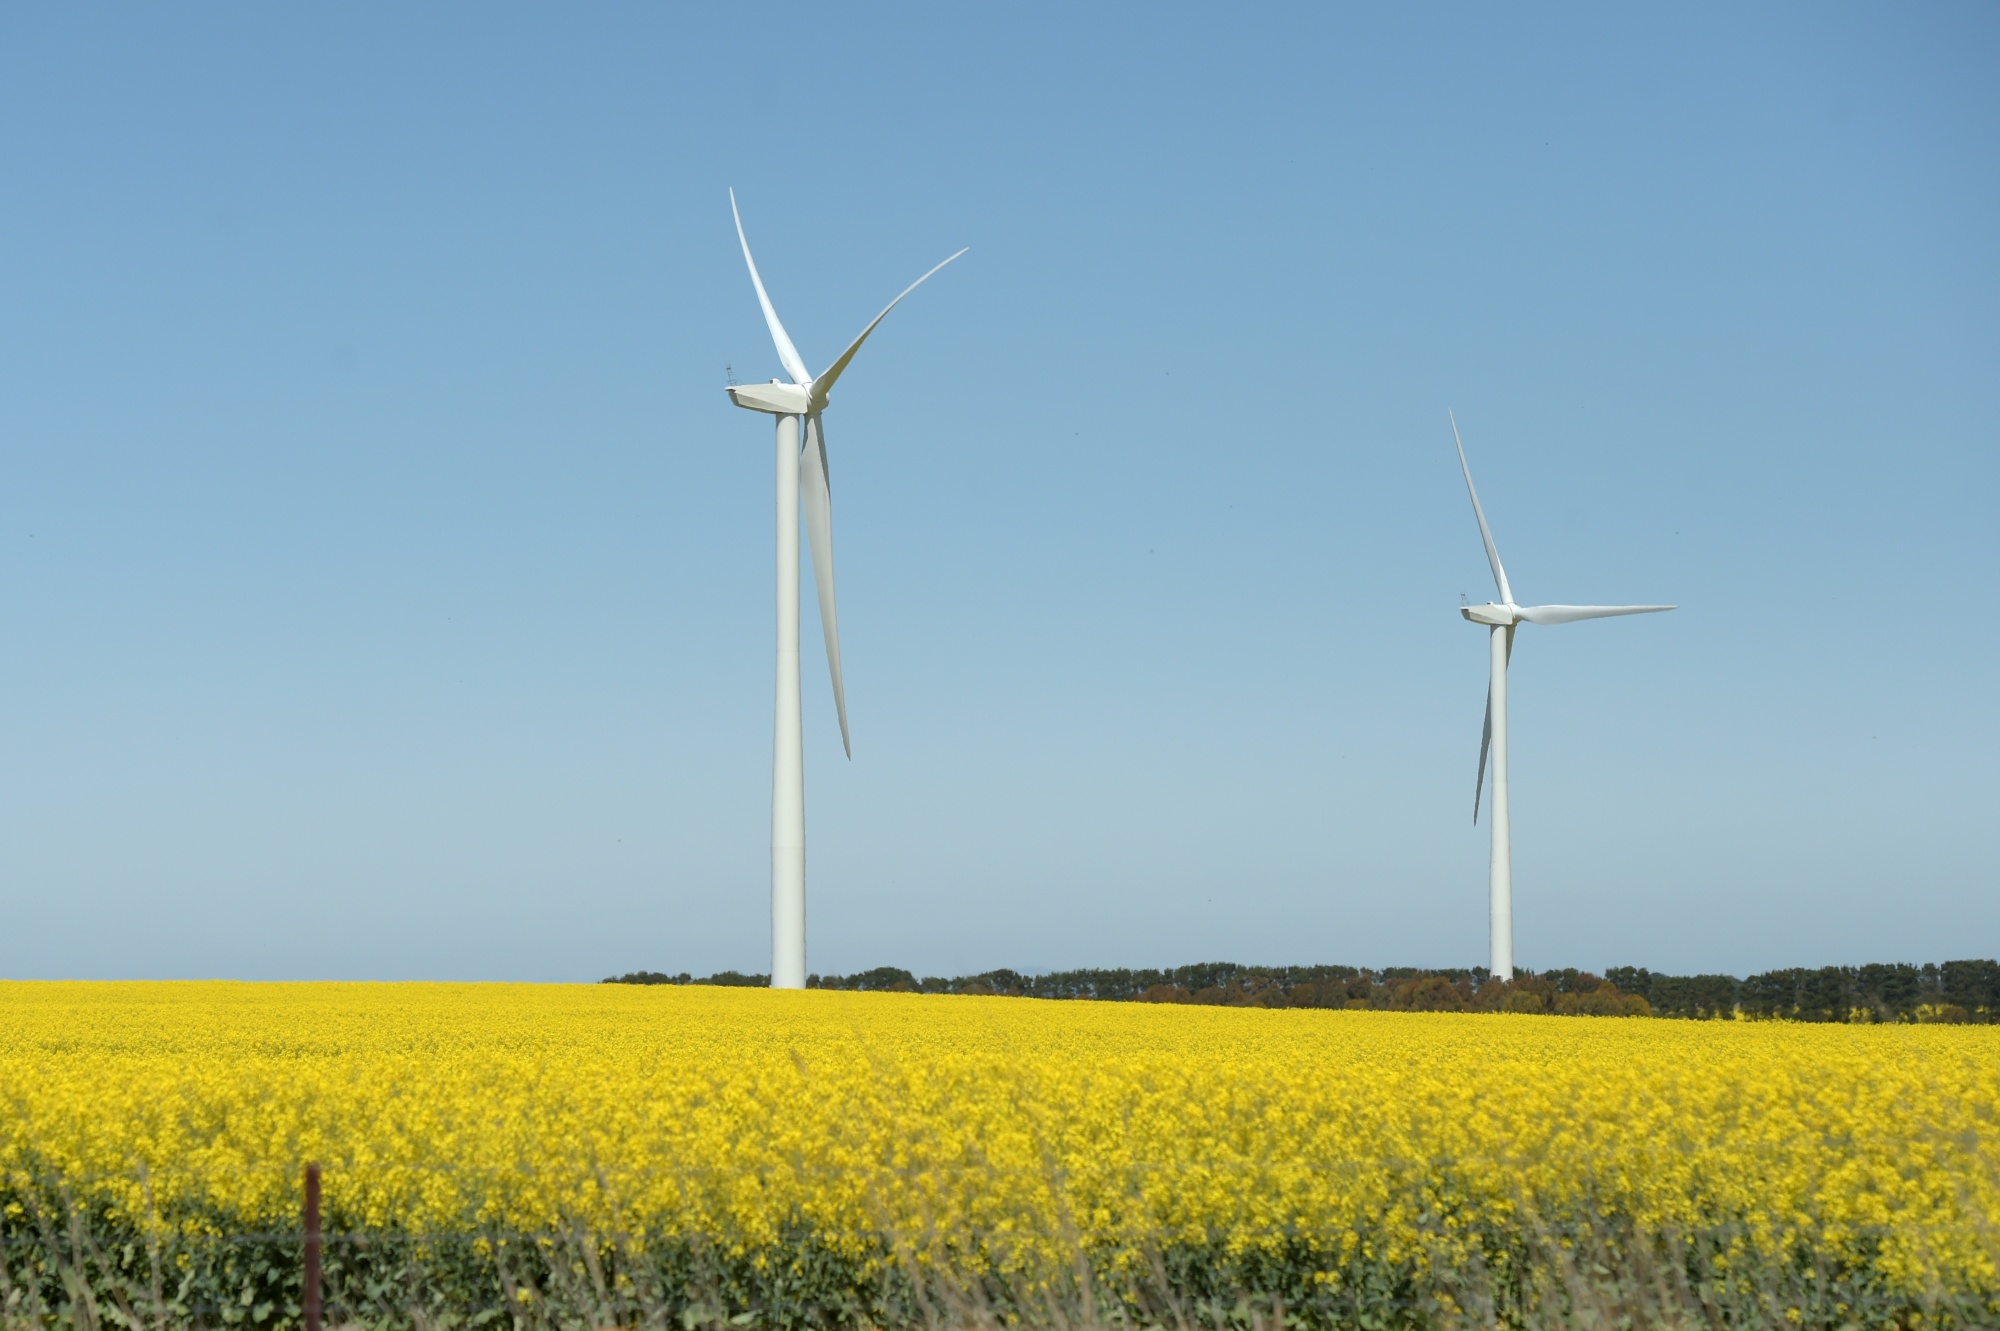 Tua bin gió và cánh đồng cây cải dầu gần Fiskville, Victoria, Australia.